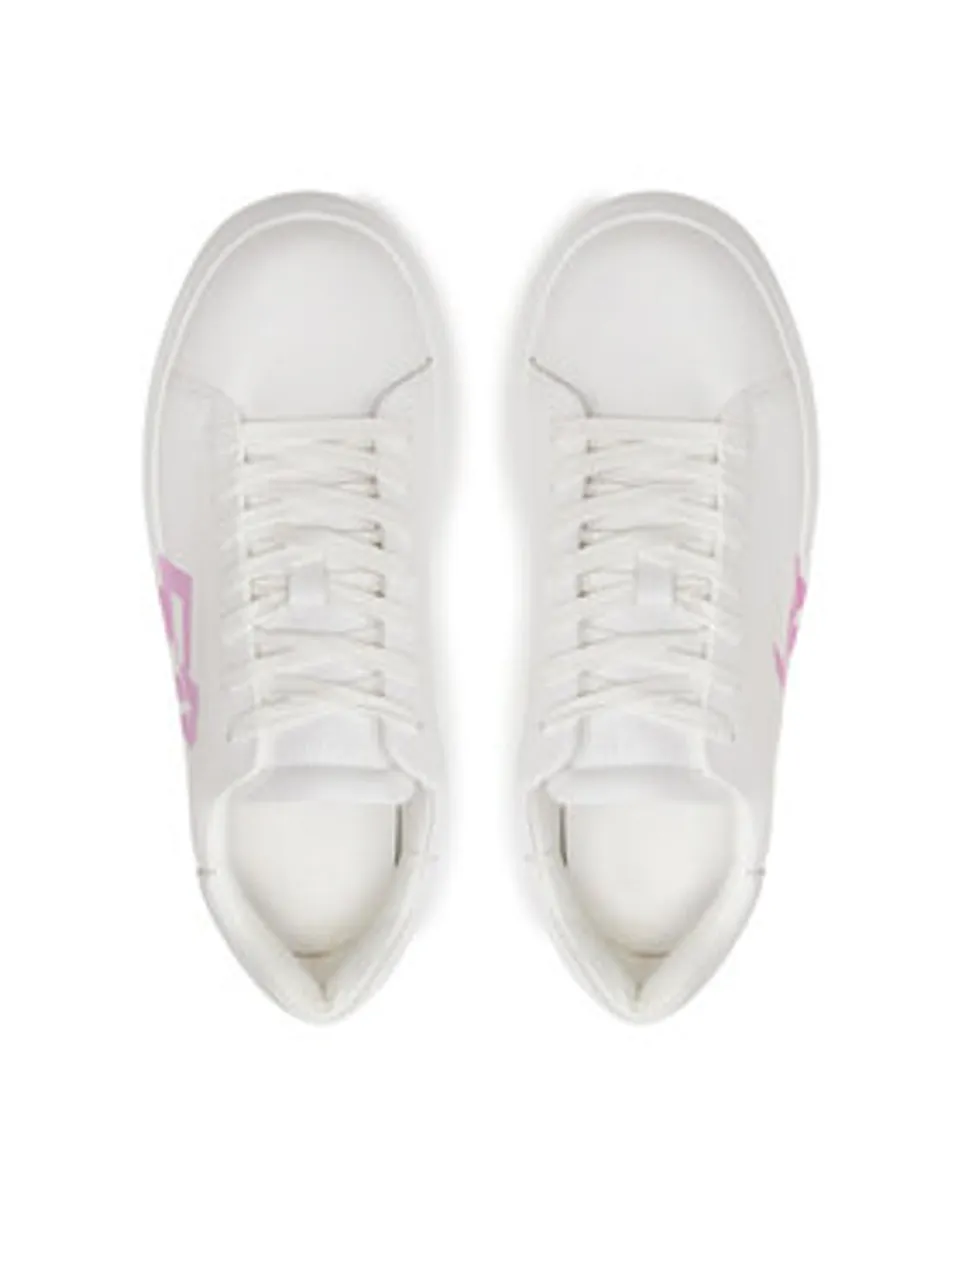 DKNY Sneakers K1408368 Weiß